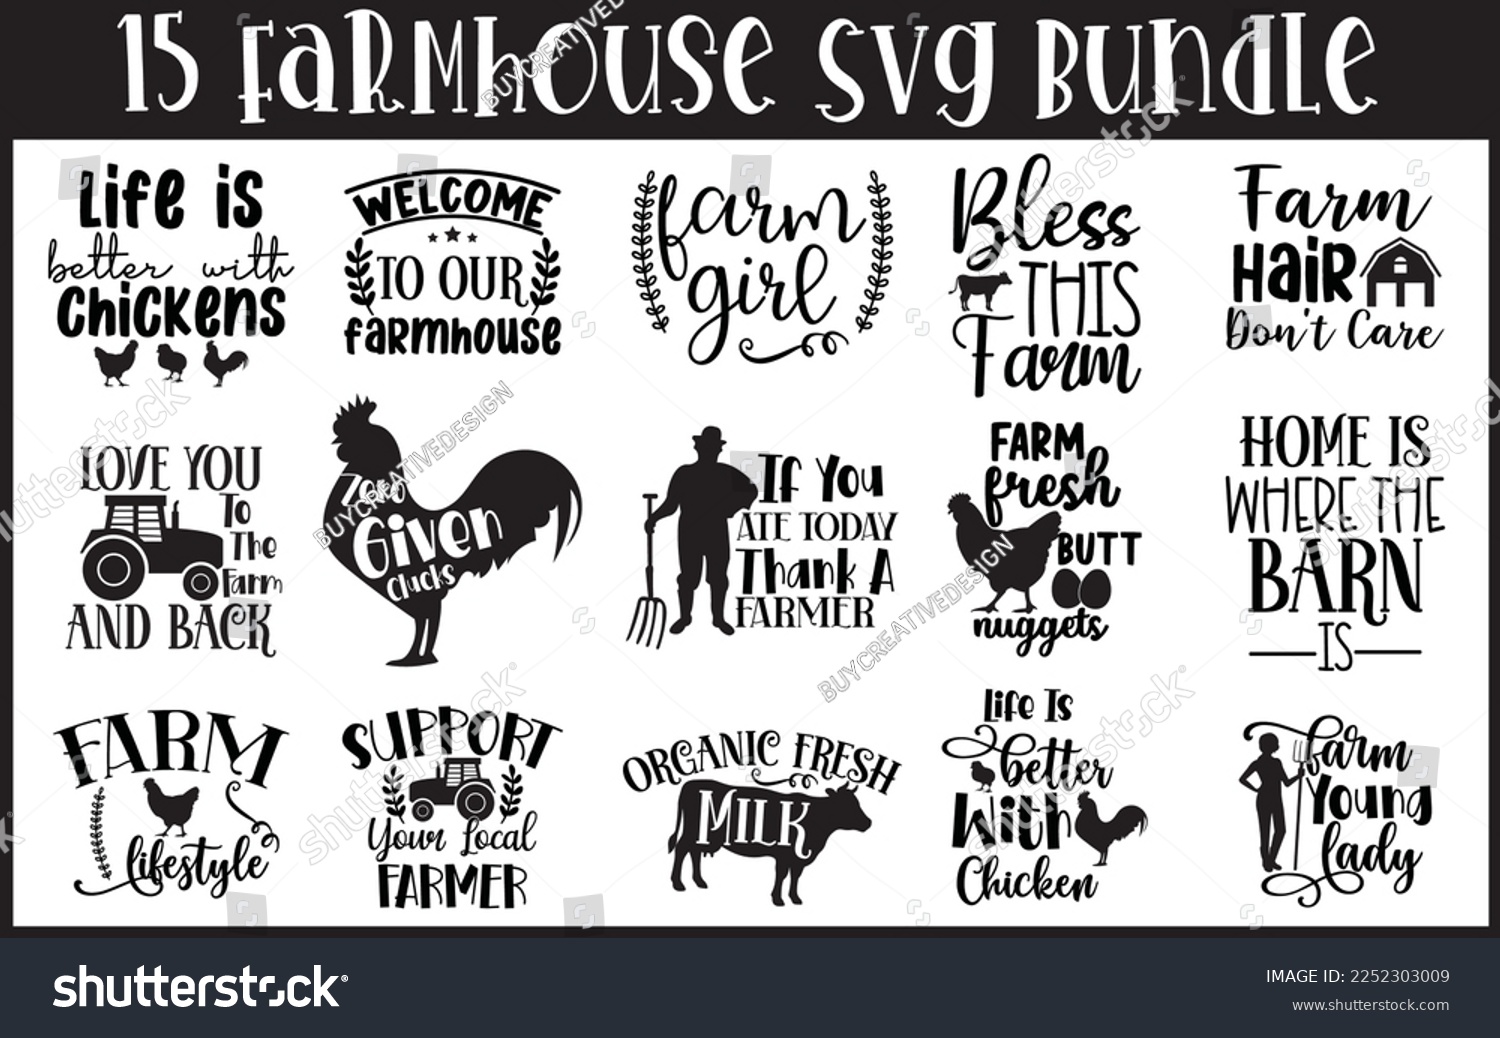 SVG of Farmhouse Svg Bundle, Farmhouse Sign Svg, Kitchen Farmhouse Svg, Cut File, Farmhouse Quotes Svg Bundle svg